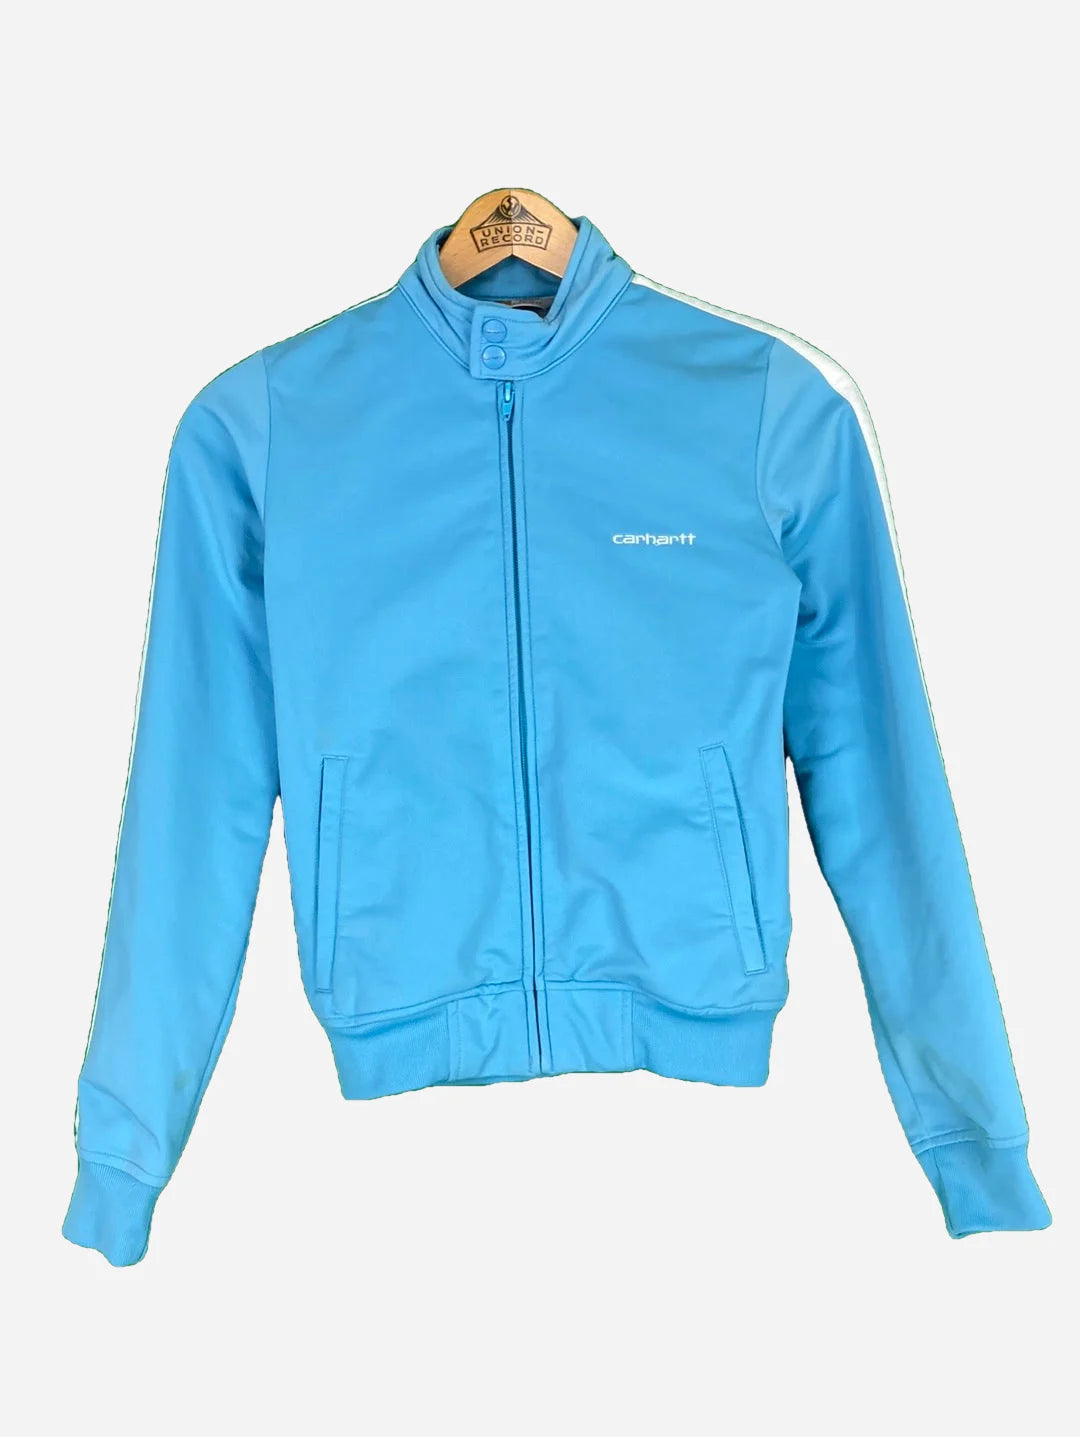 Carhartt track jacket (XS)